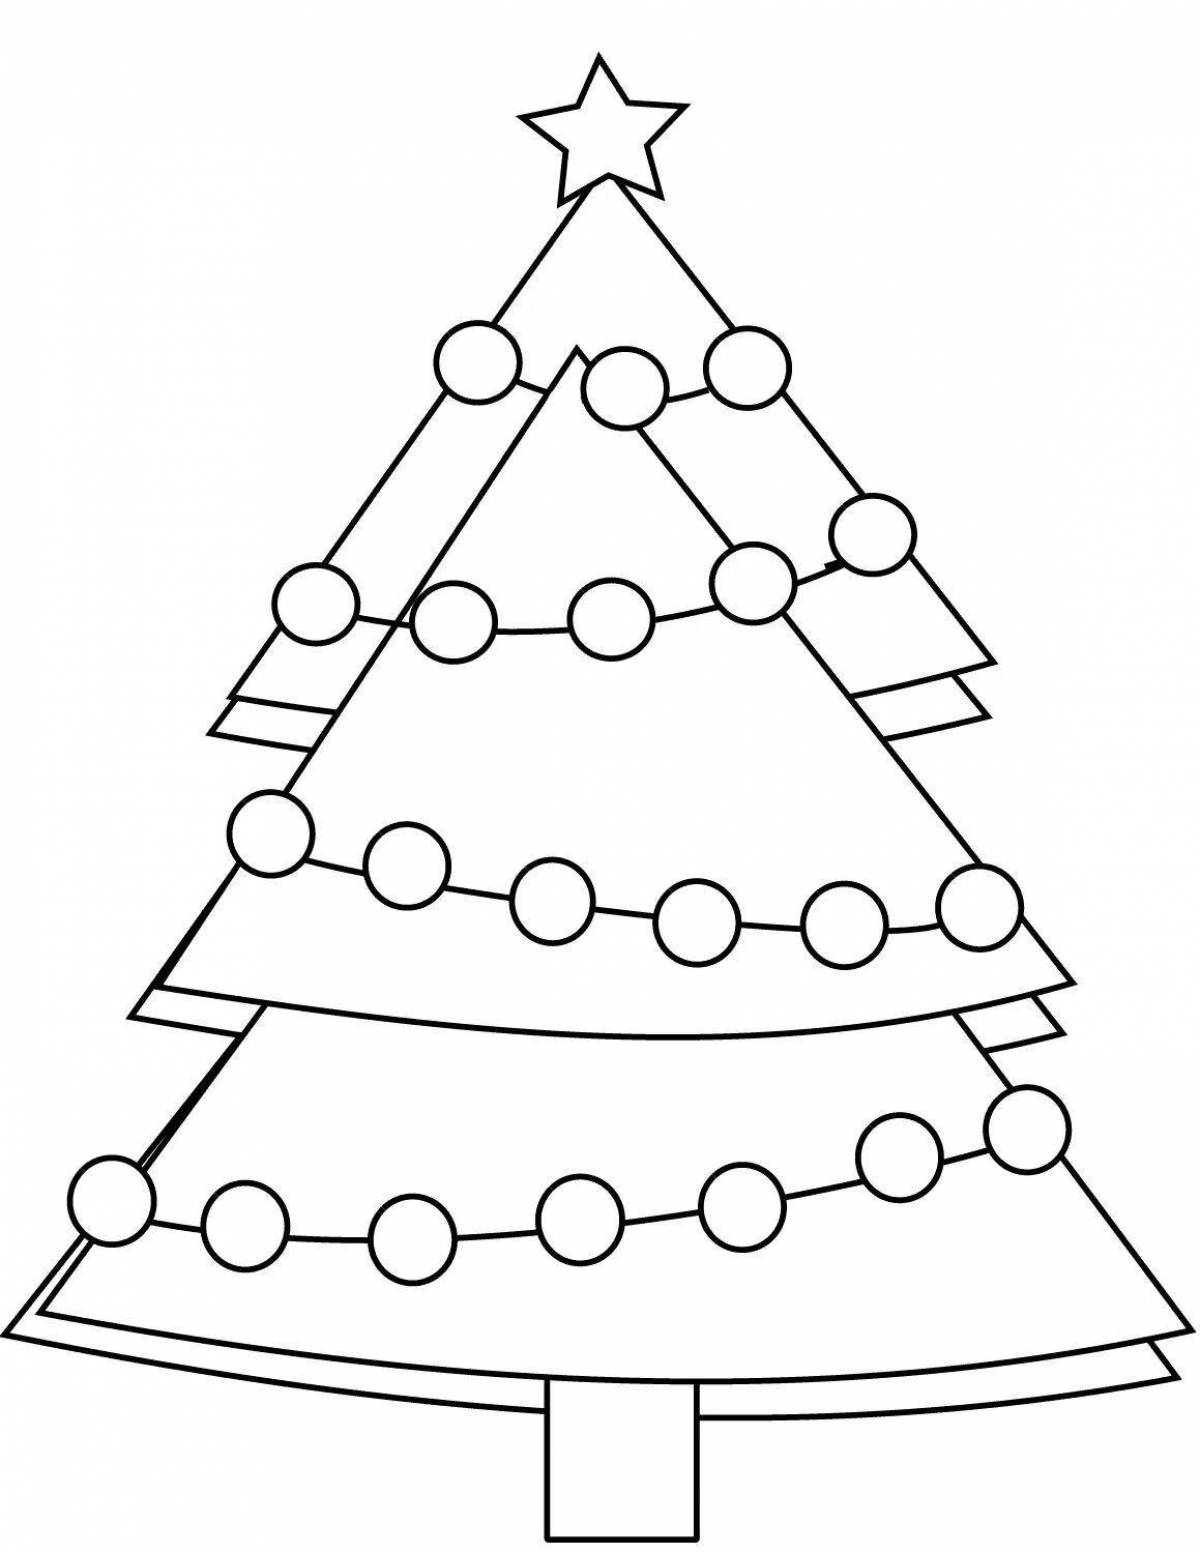 Large Christmas tree for children